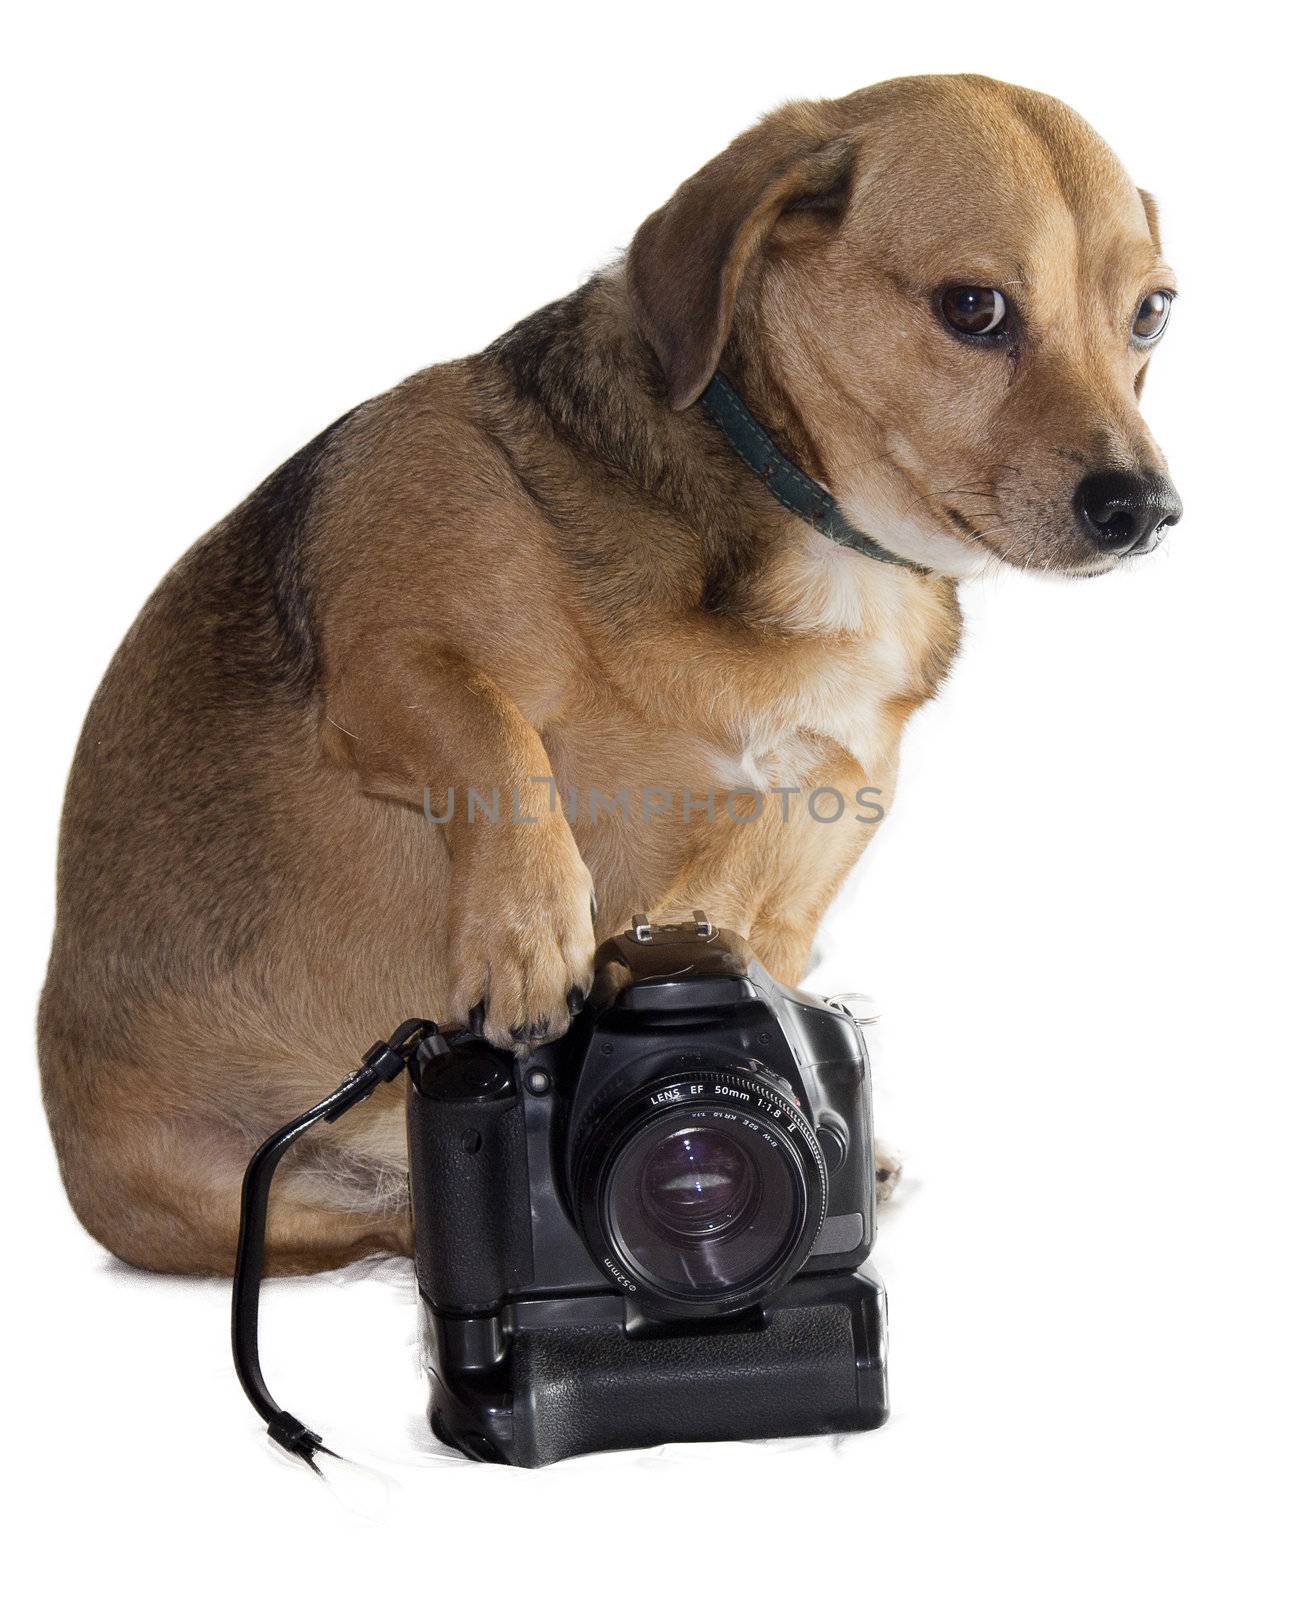 dog and camera by danilobiancalana